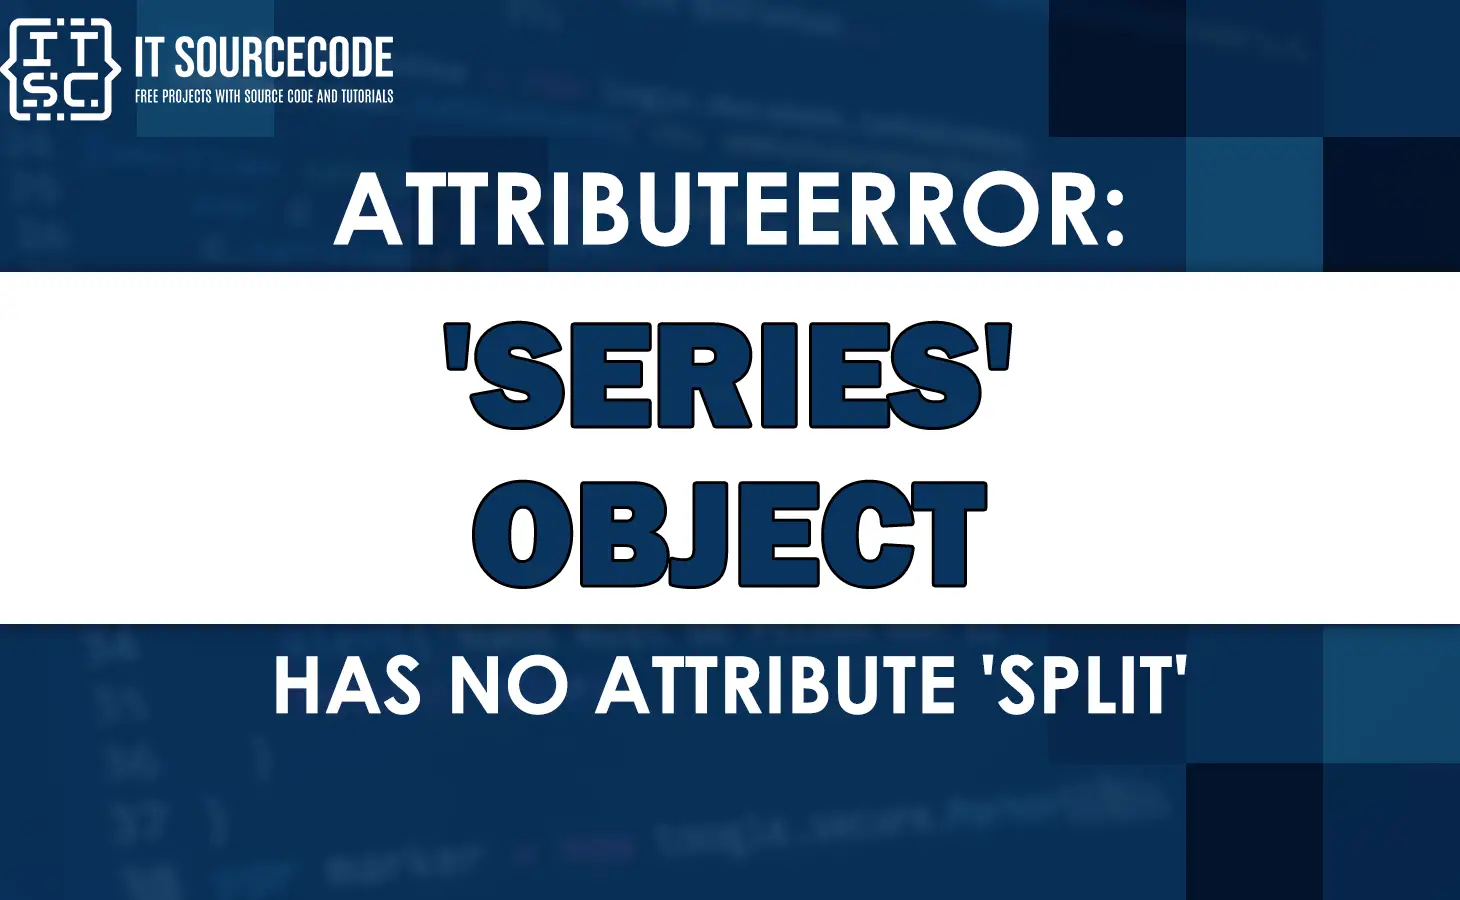 Attributeerror: 'series' object has no attribute 'split'